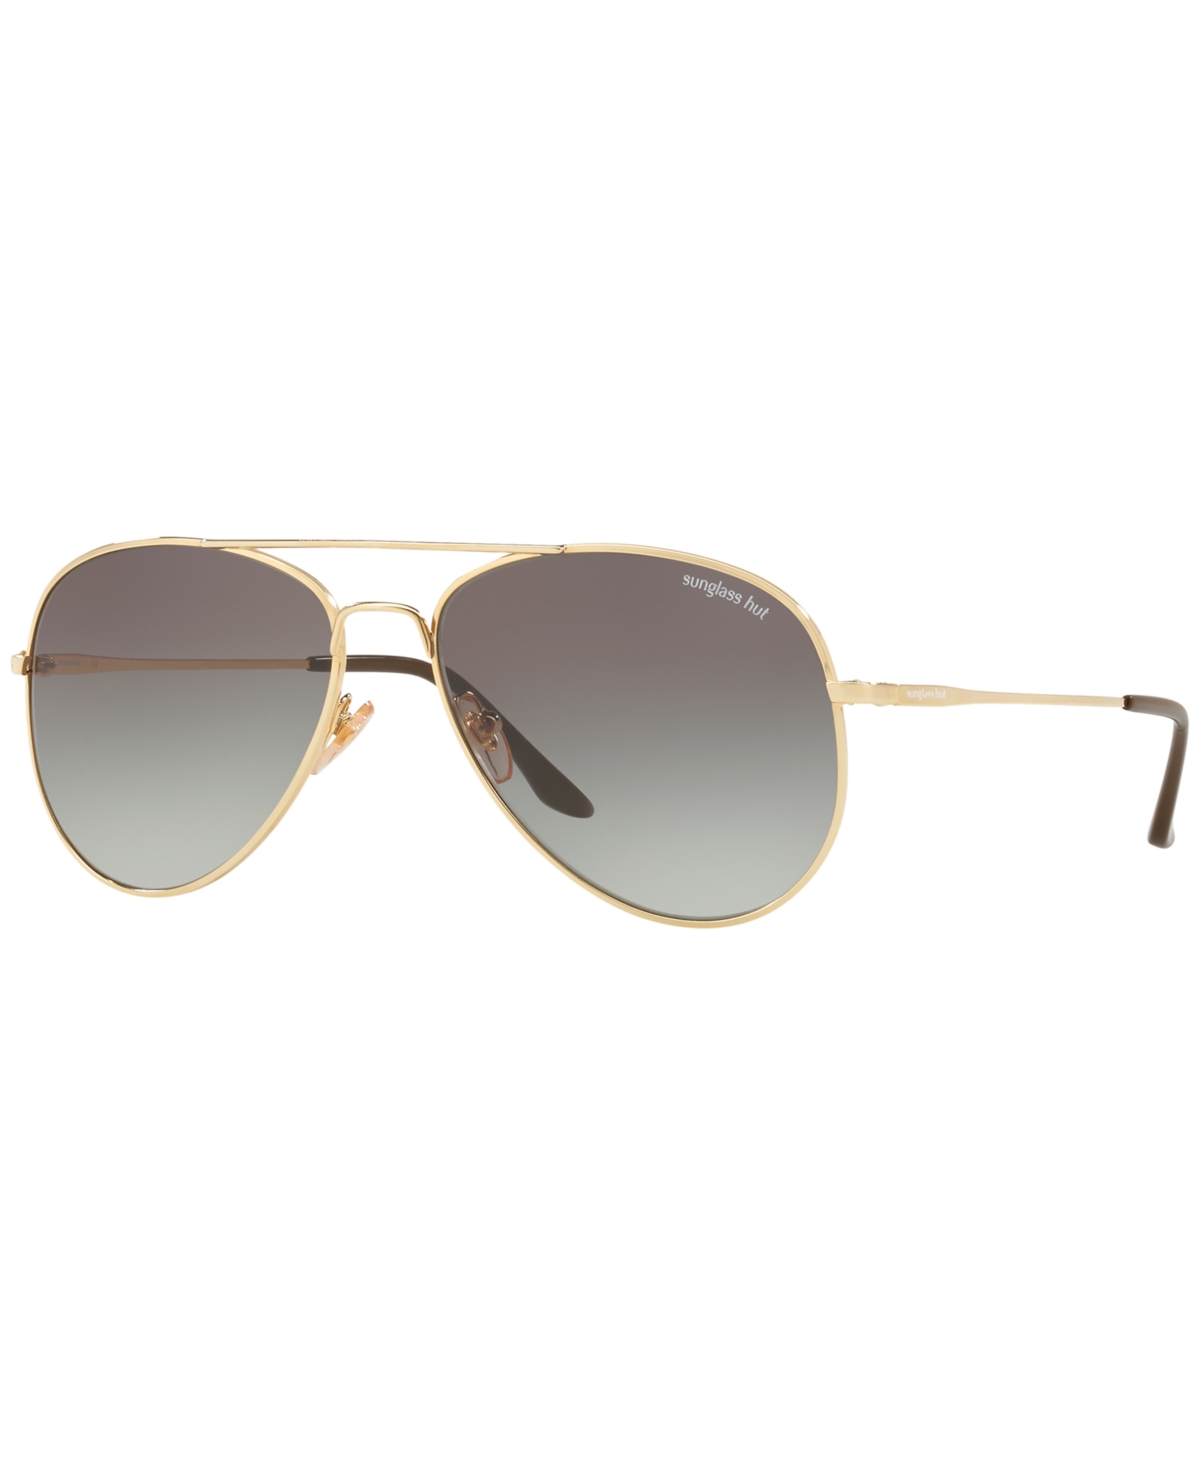 Sunglass Hut Collection Sunglasses, Hu1001 59 In Gold,grey Gradient